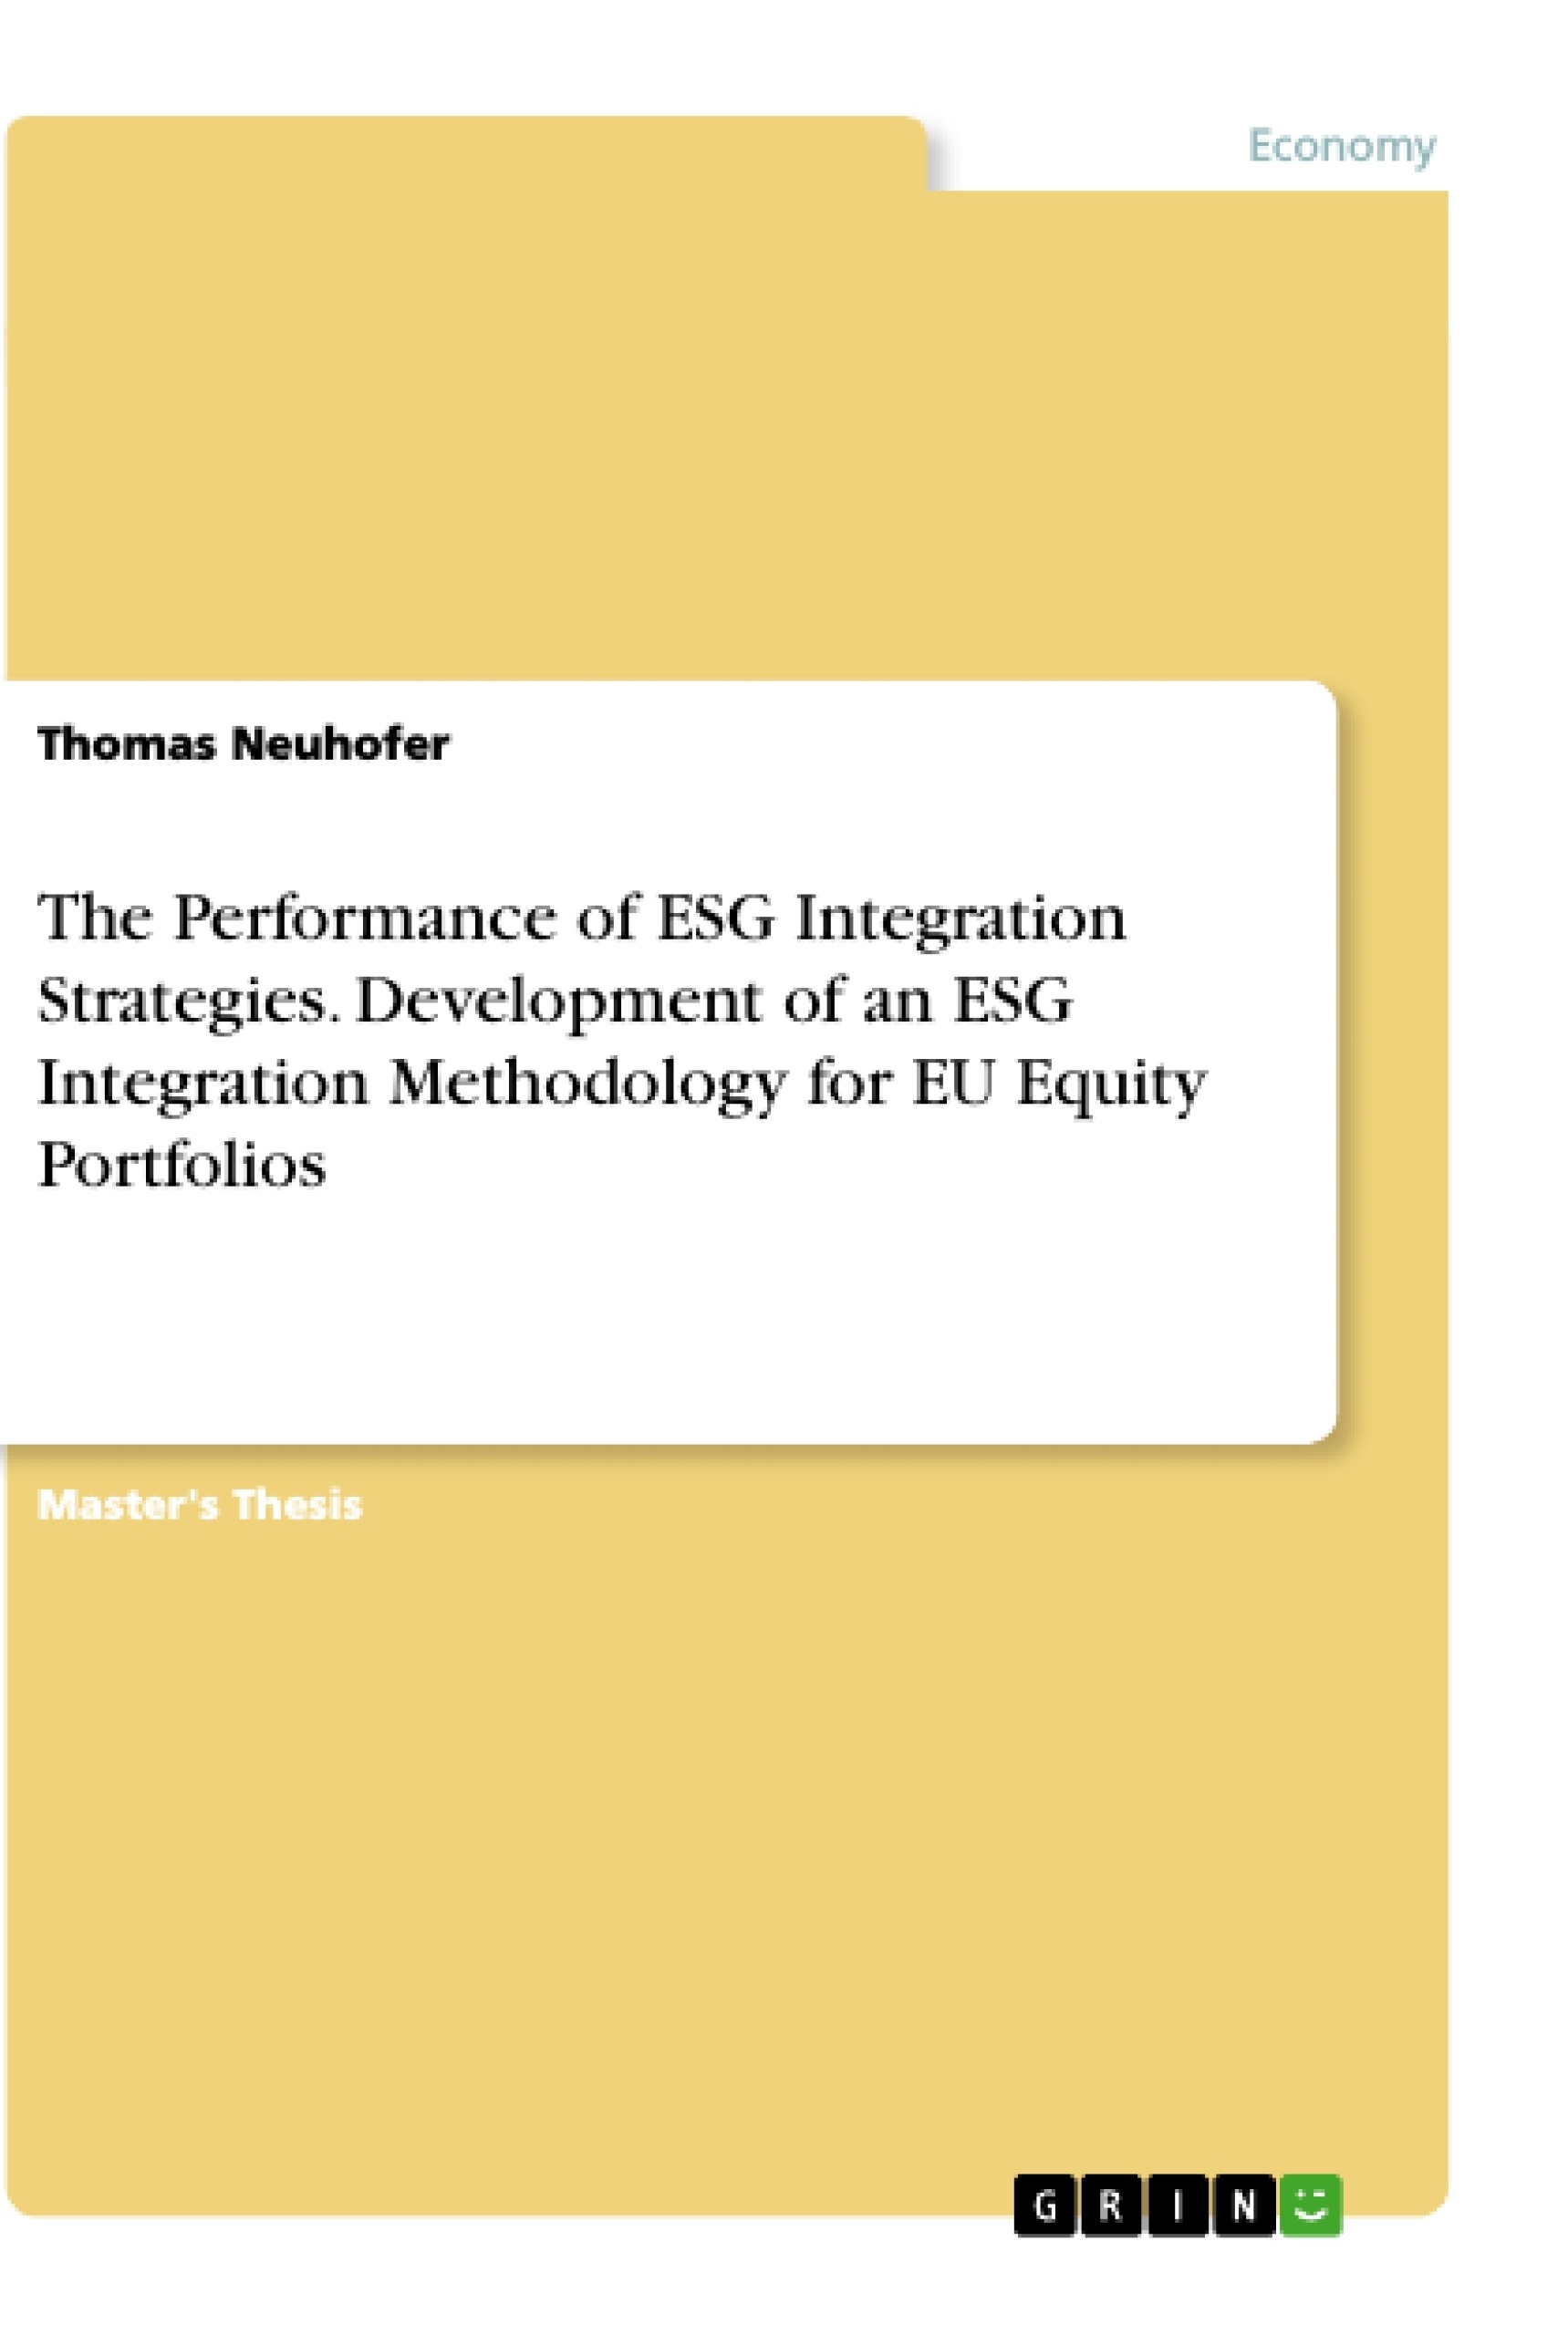 Title: The Performance of ESG Integration Strategies. Development of an ESG Integration Methodology for EU Equity Portfolios